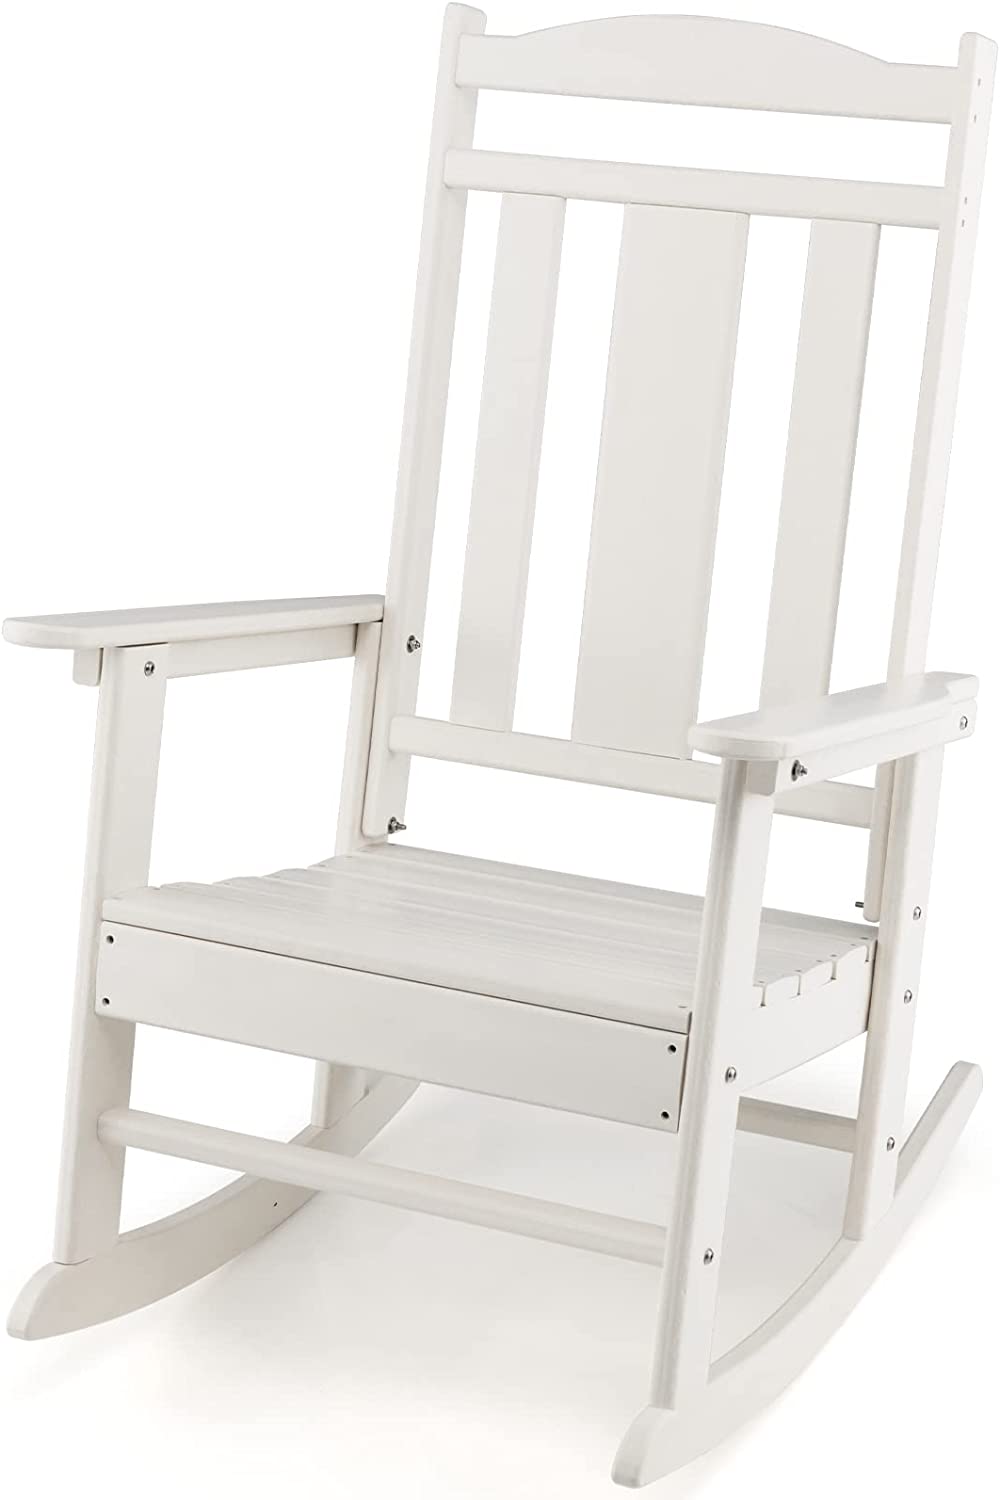 Giantex Patio Rocking Chair - All-Weather HDPE Porch Rocker Chair